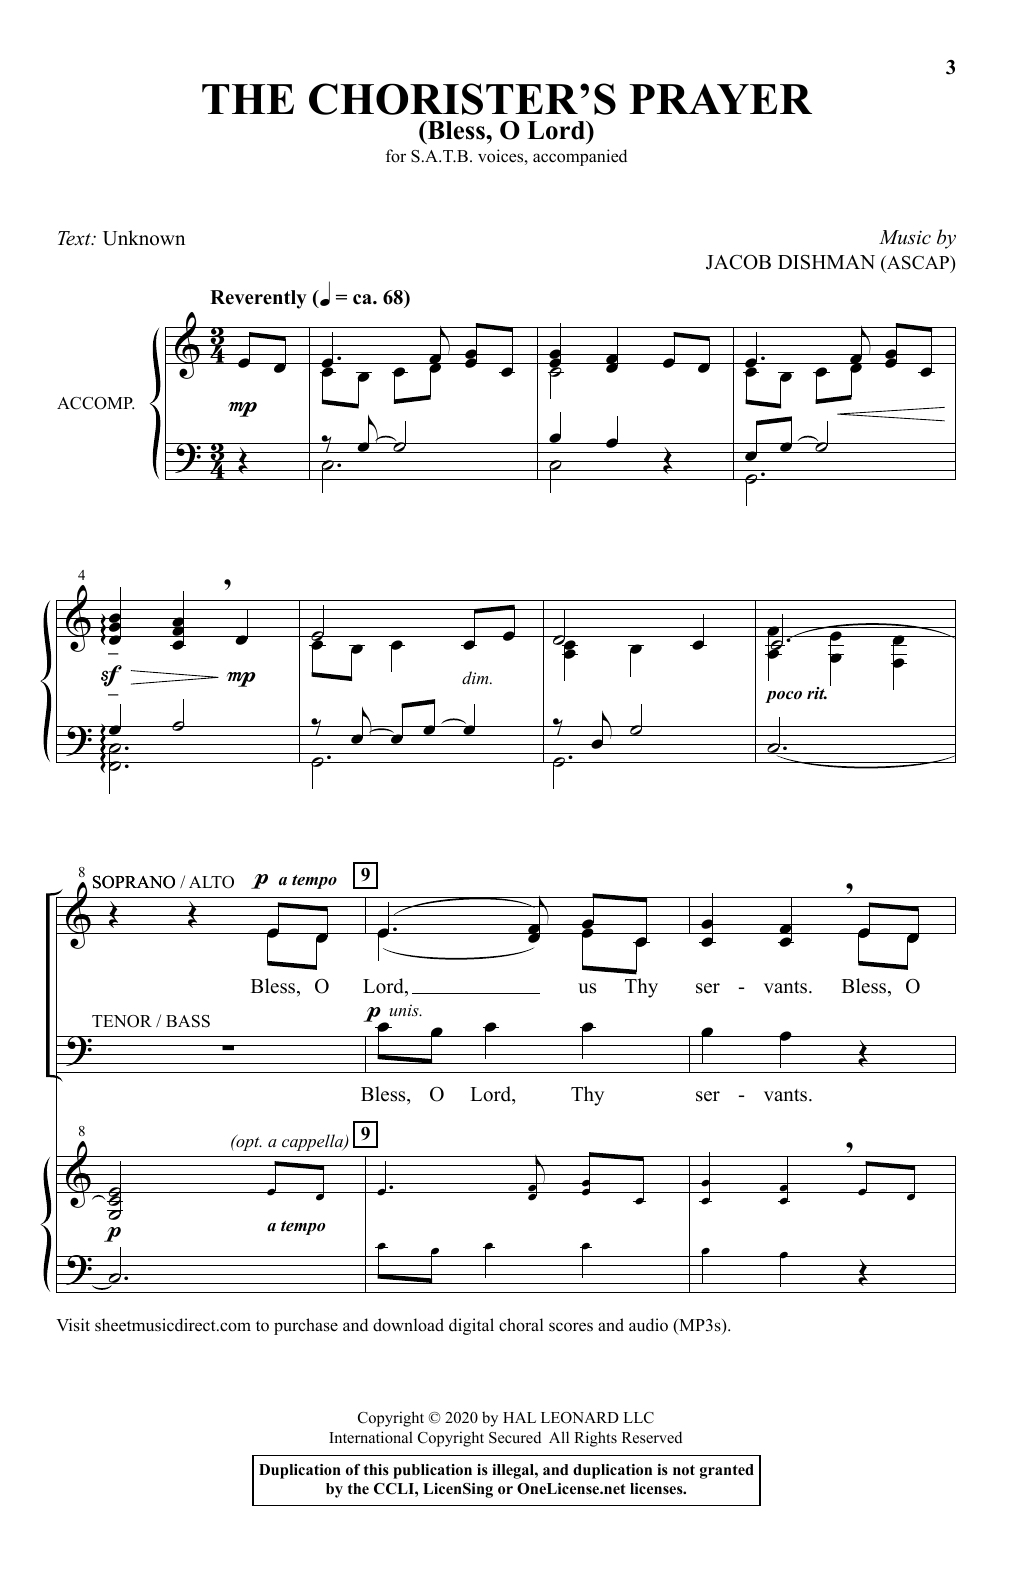 Jacob Dishman The Chorister's Prayer (Bless, O Lord) Sheet Music Notes & Chords for SATB Choir - Download or Print PDF